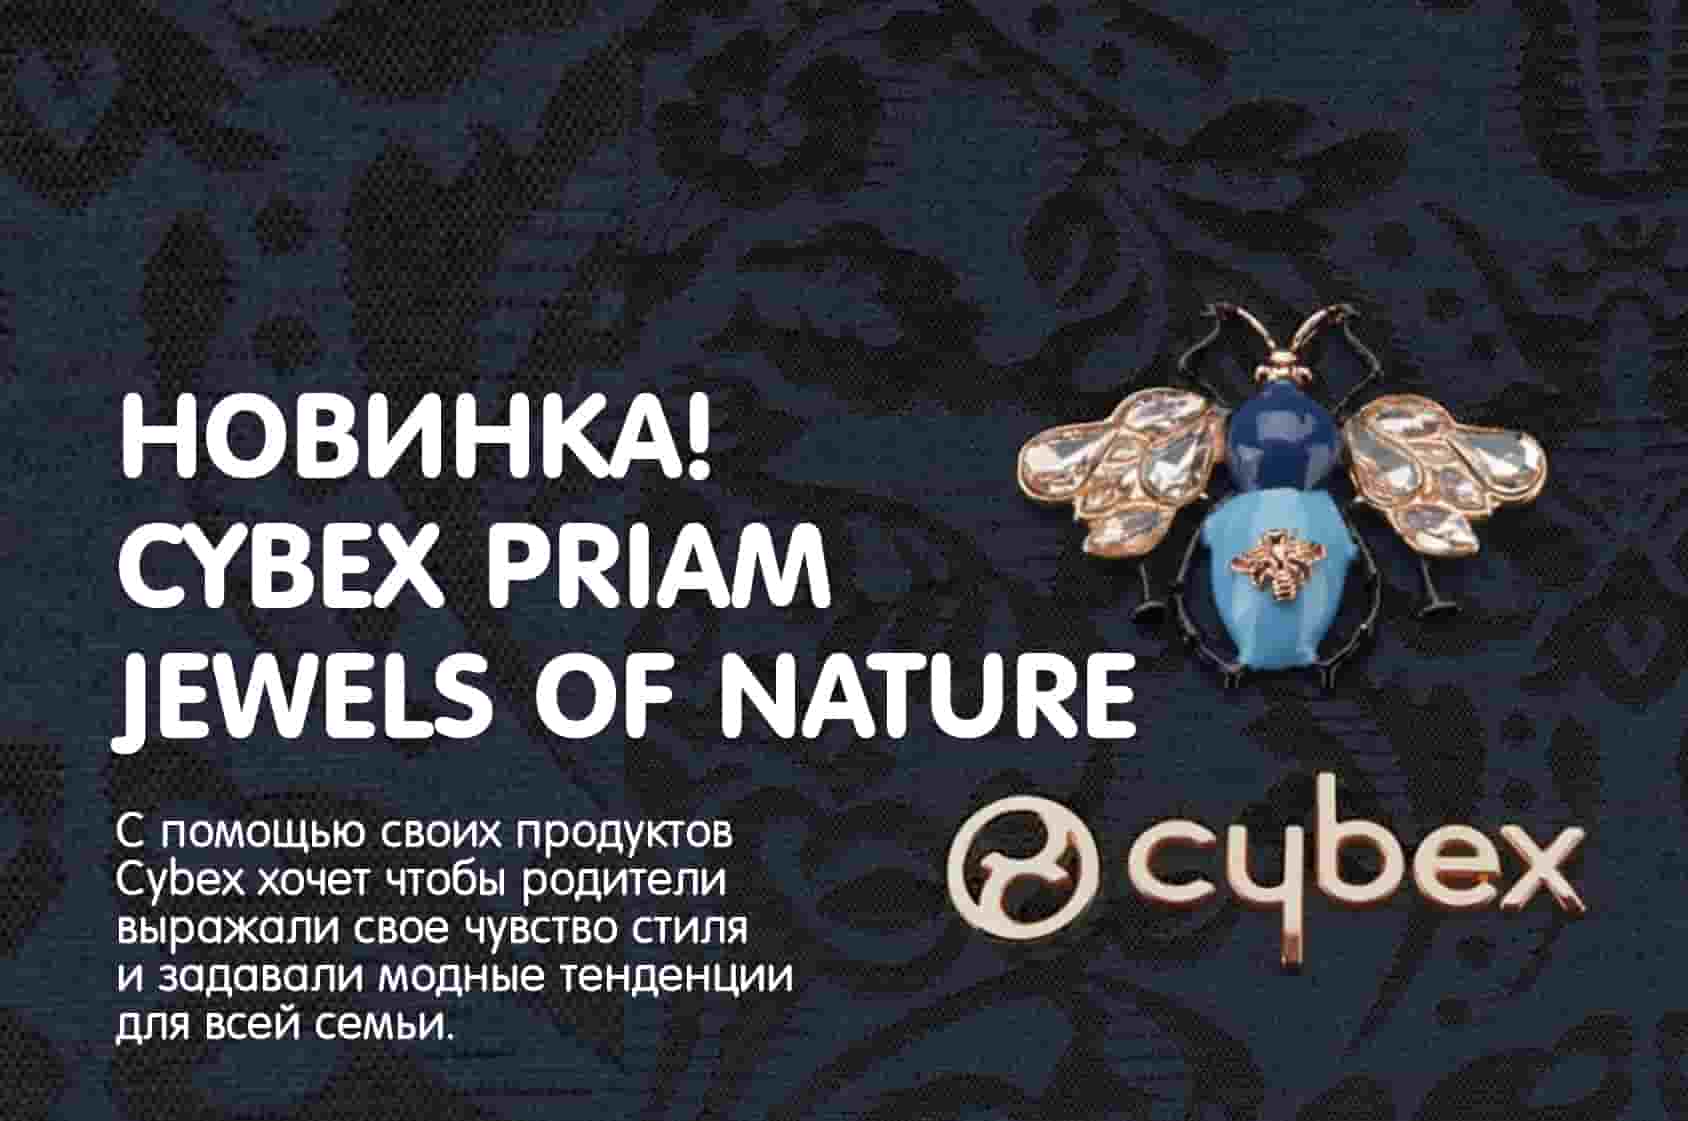 Новинка! Коляска Cybex Priam Jewels of Nature 